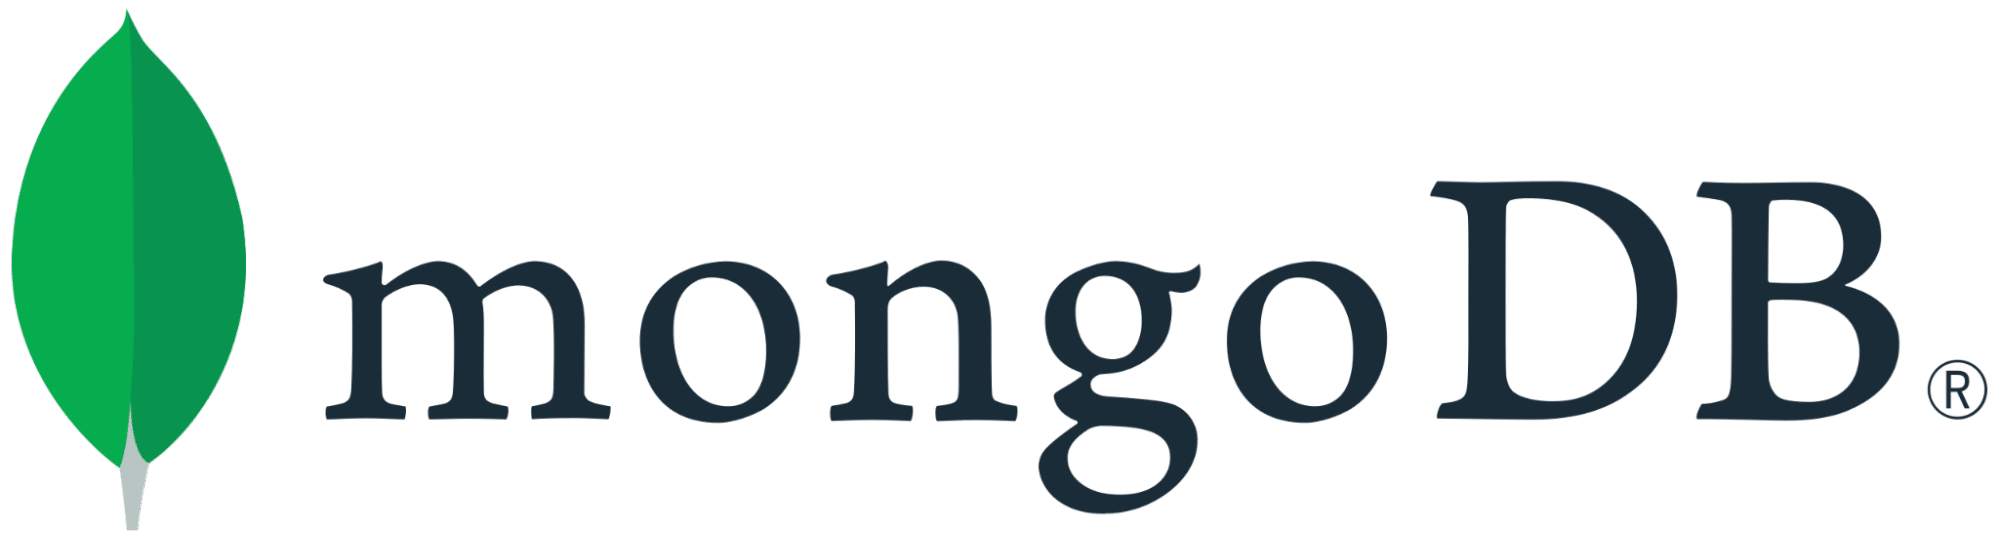 Logo MongoDB.